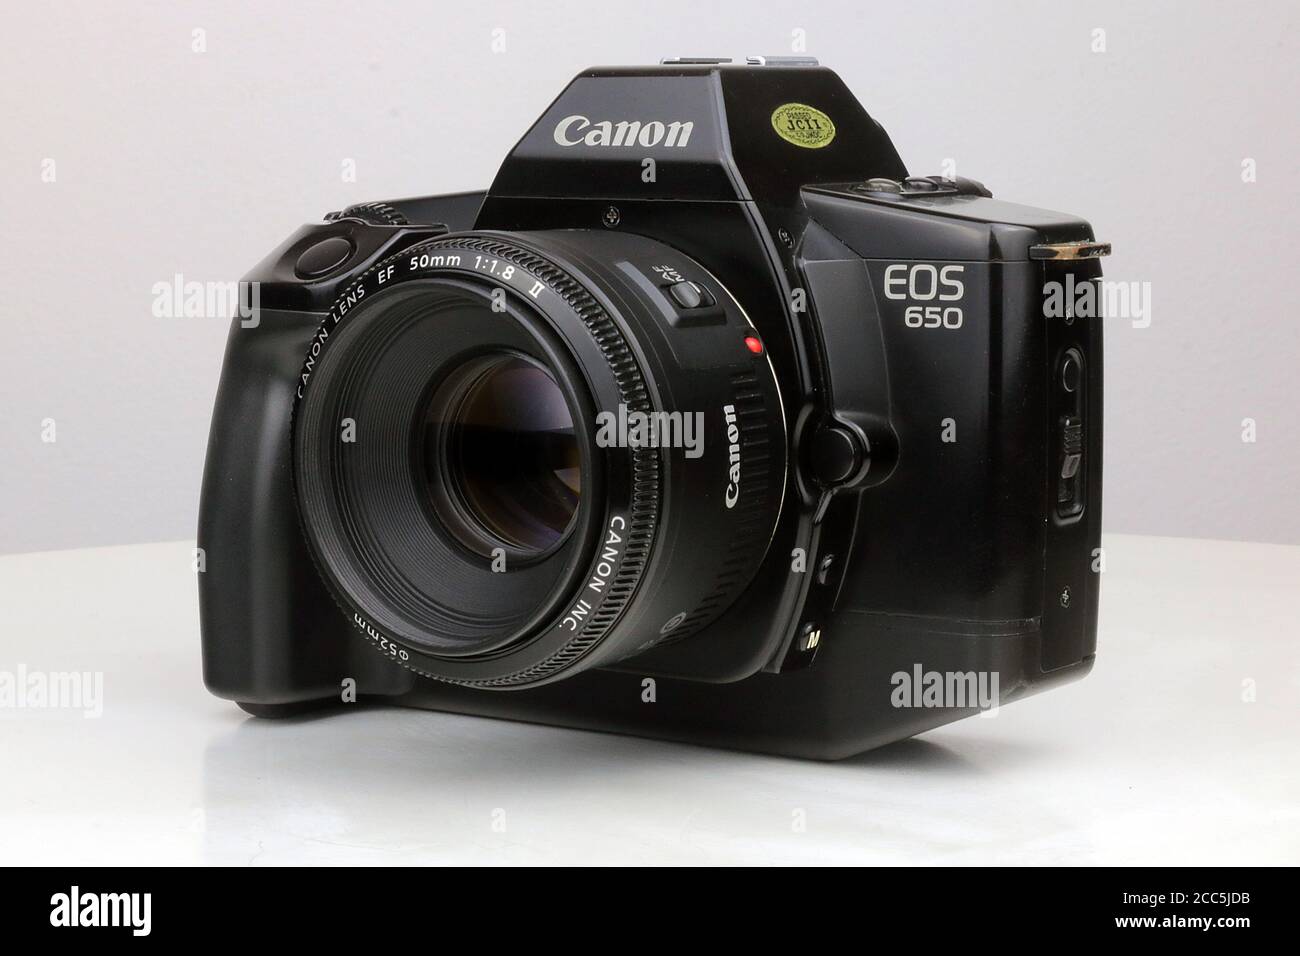 Canon EOS 650 slr 35mm film camera Stock Photo